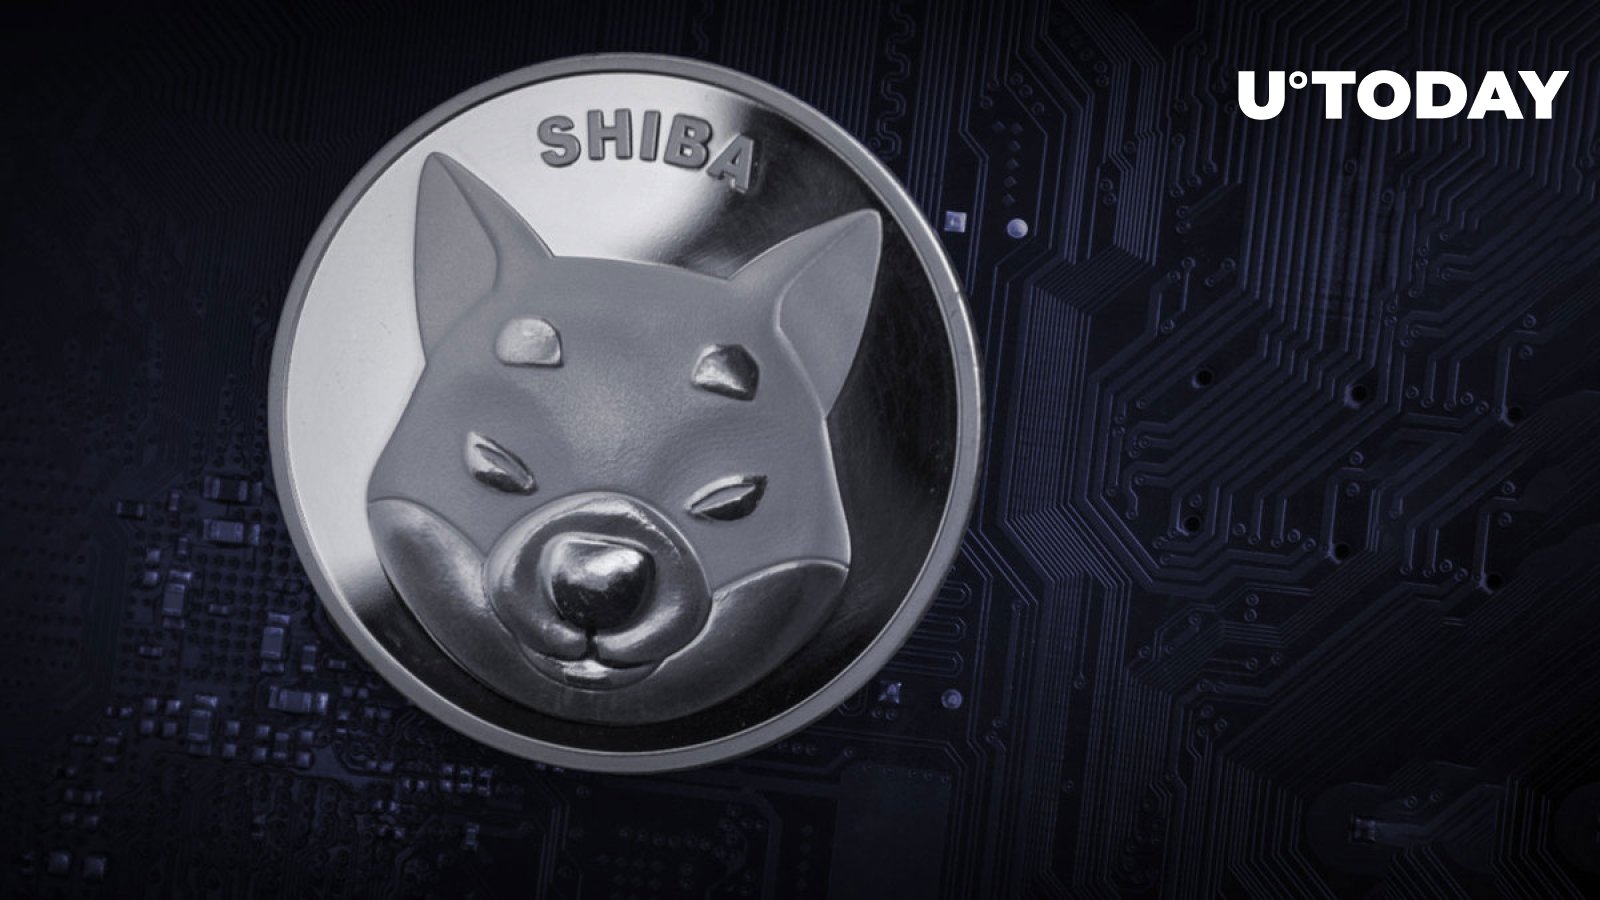 223 Billion Shiba Inu Acquired as Lead SHIB Developer Raises His Head About Shibarium